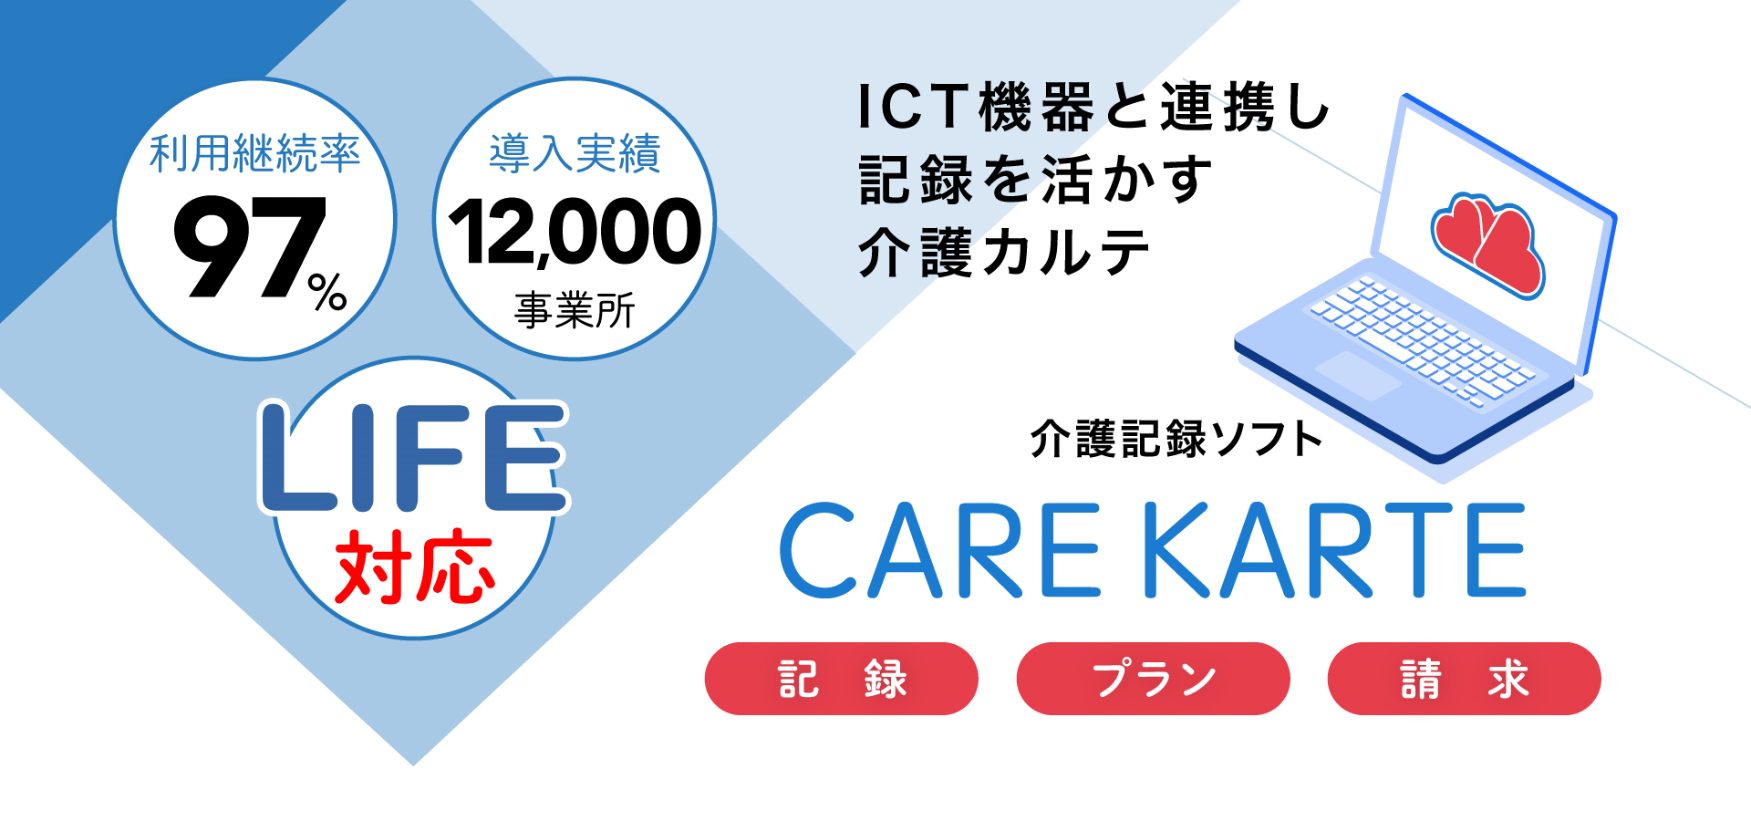 ICT機器と連携し、記録を活かす回度カルテ 介護記録ソフト CARE KARTE 利用継続率97% 導入実績12000事業所 LIFE対応